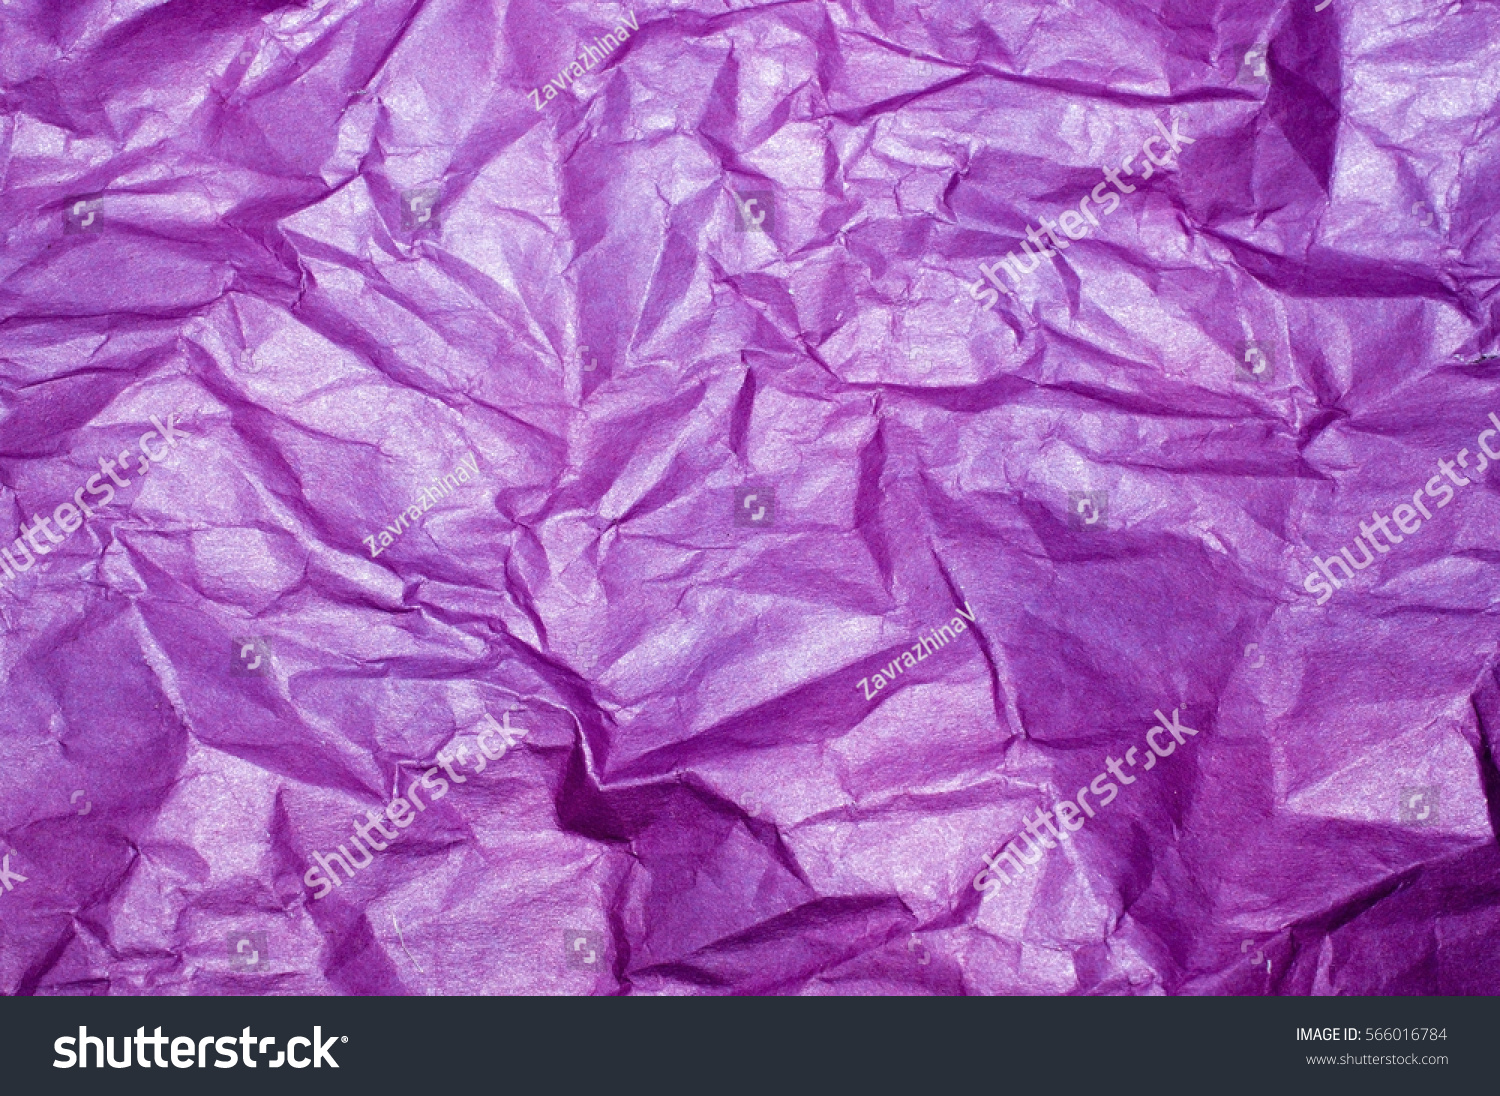 Purple crumpled paper #566016784